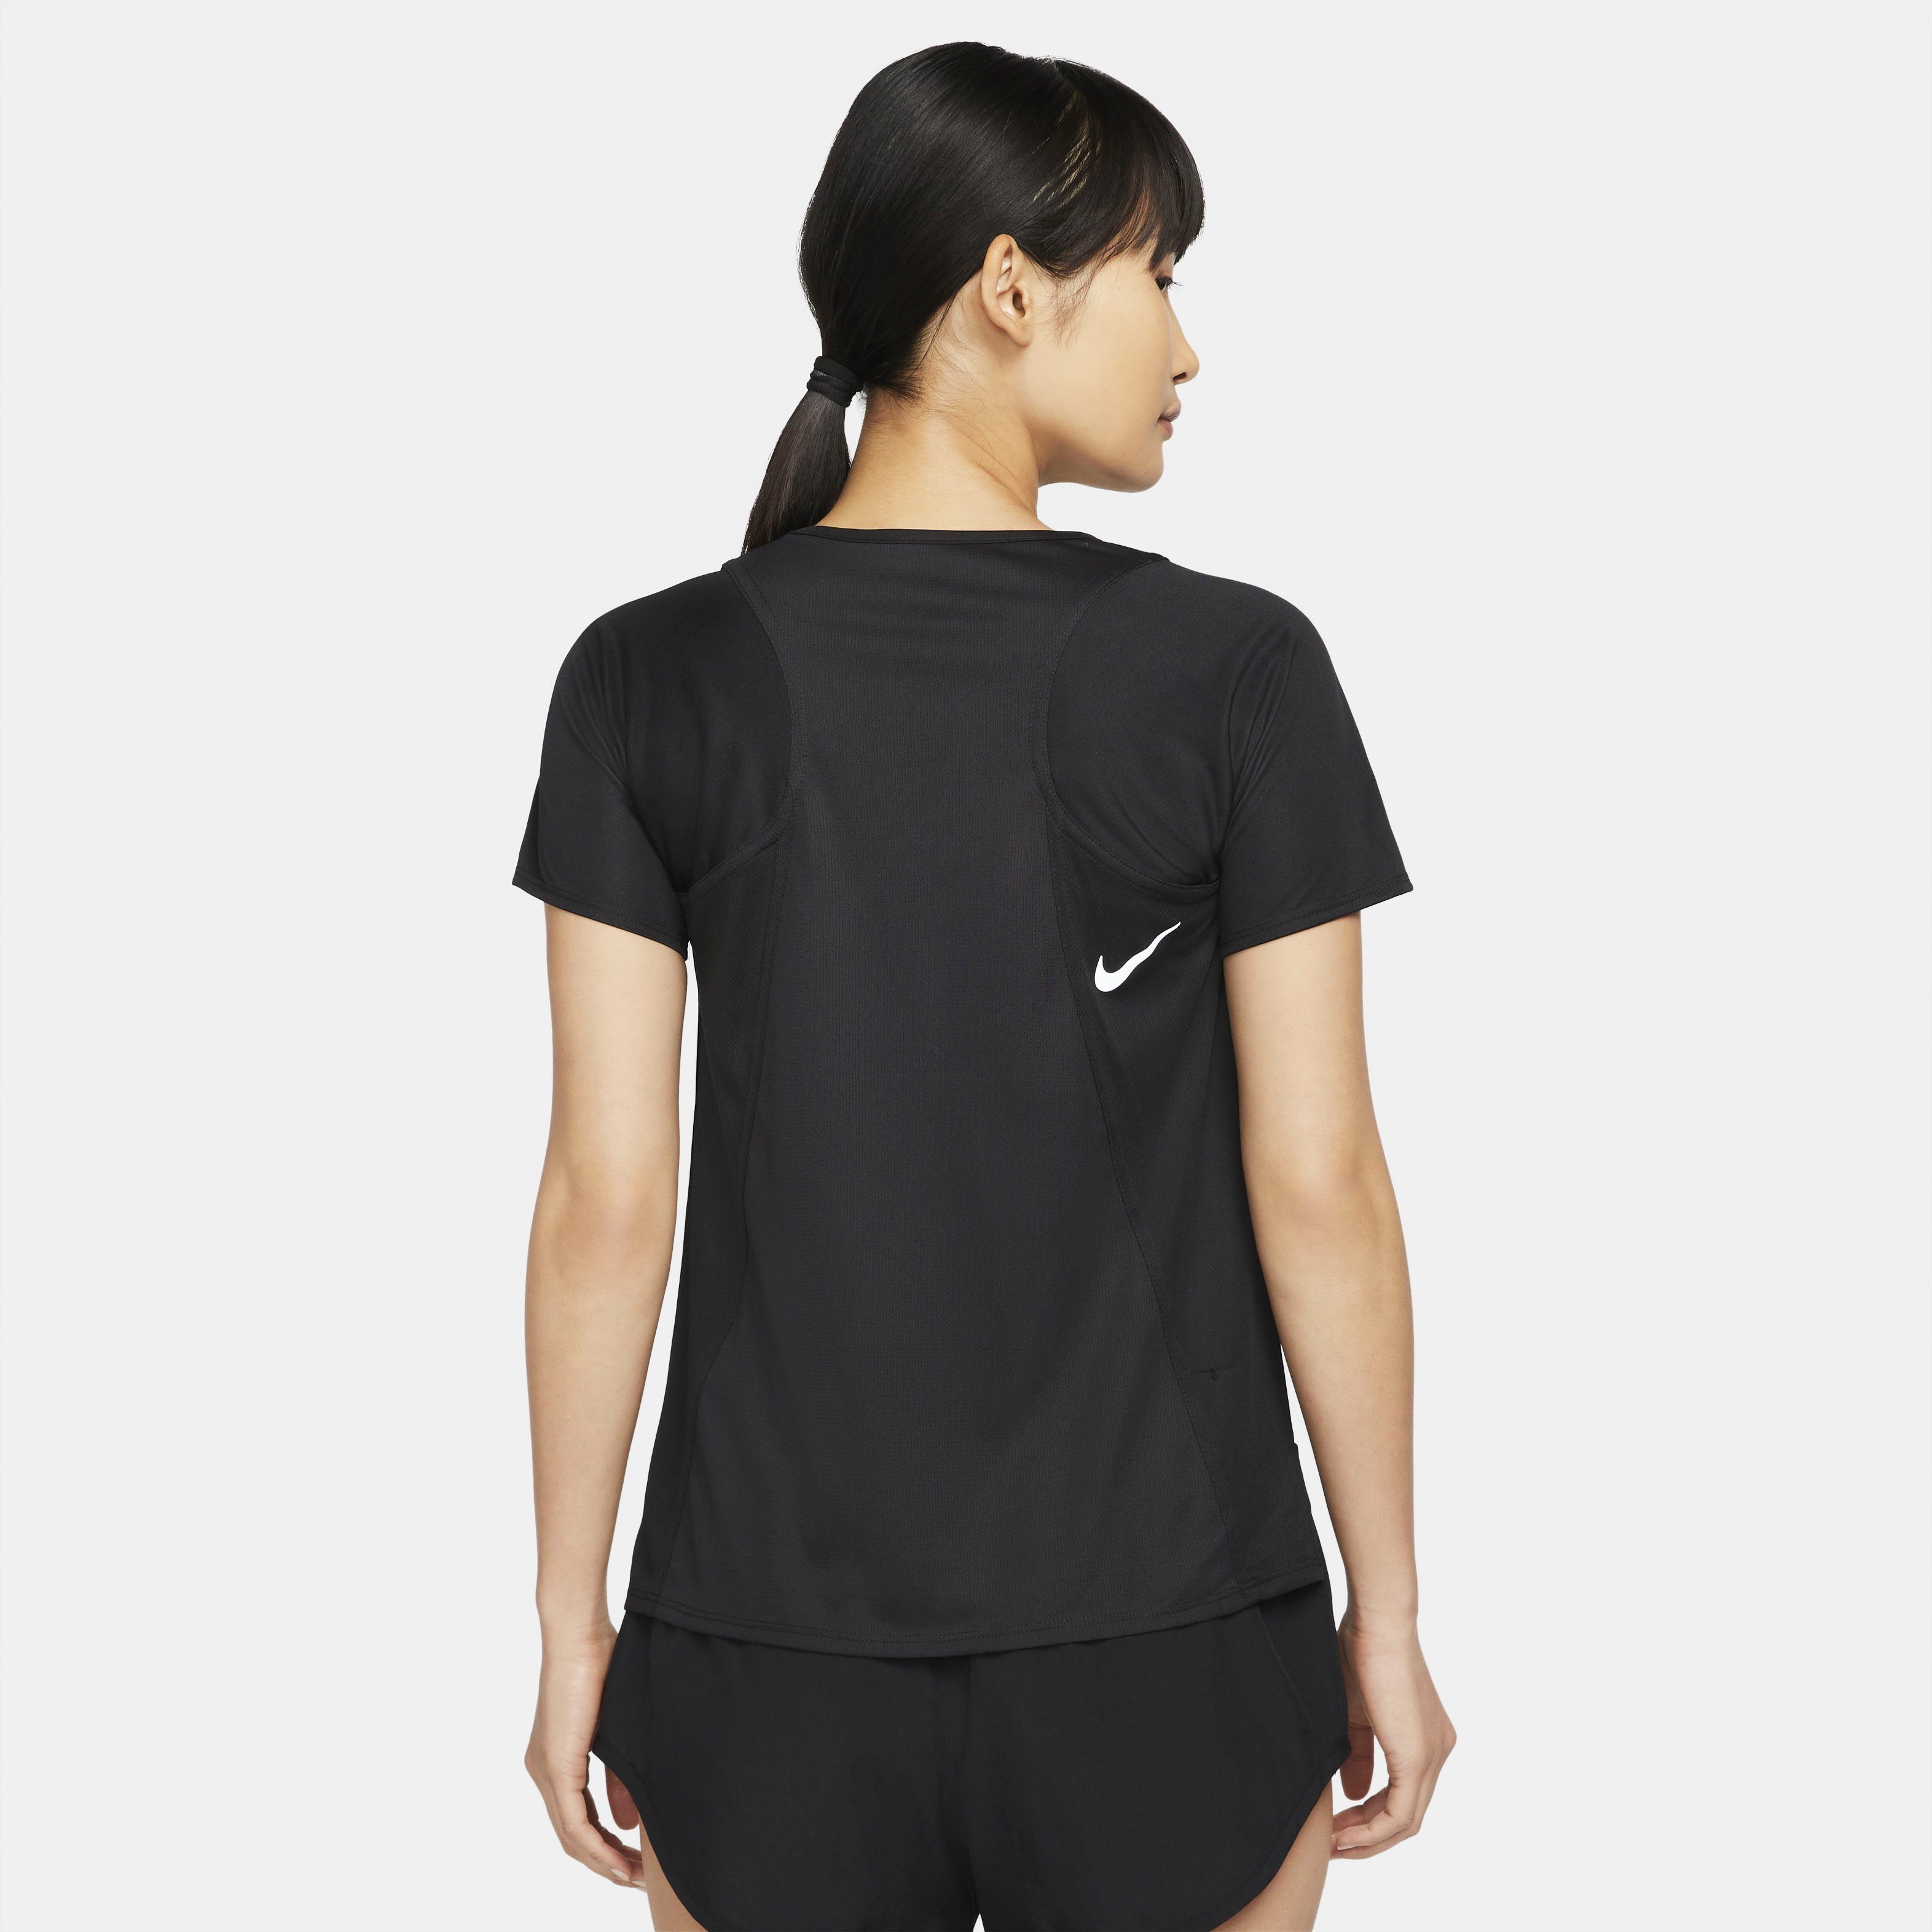 TOP Laufshirt RUNNING DRI-FIT Nike WOMEN'S BLACK/REFLECTIVE SHORT-SLEEVE SILV RACE